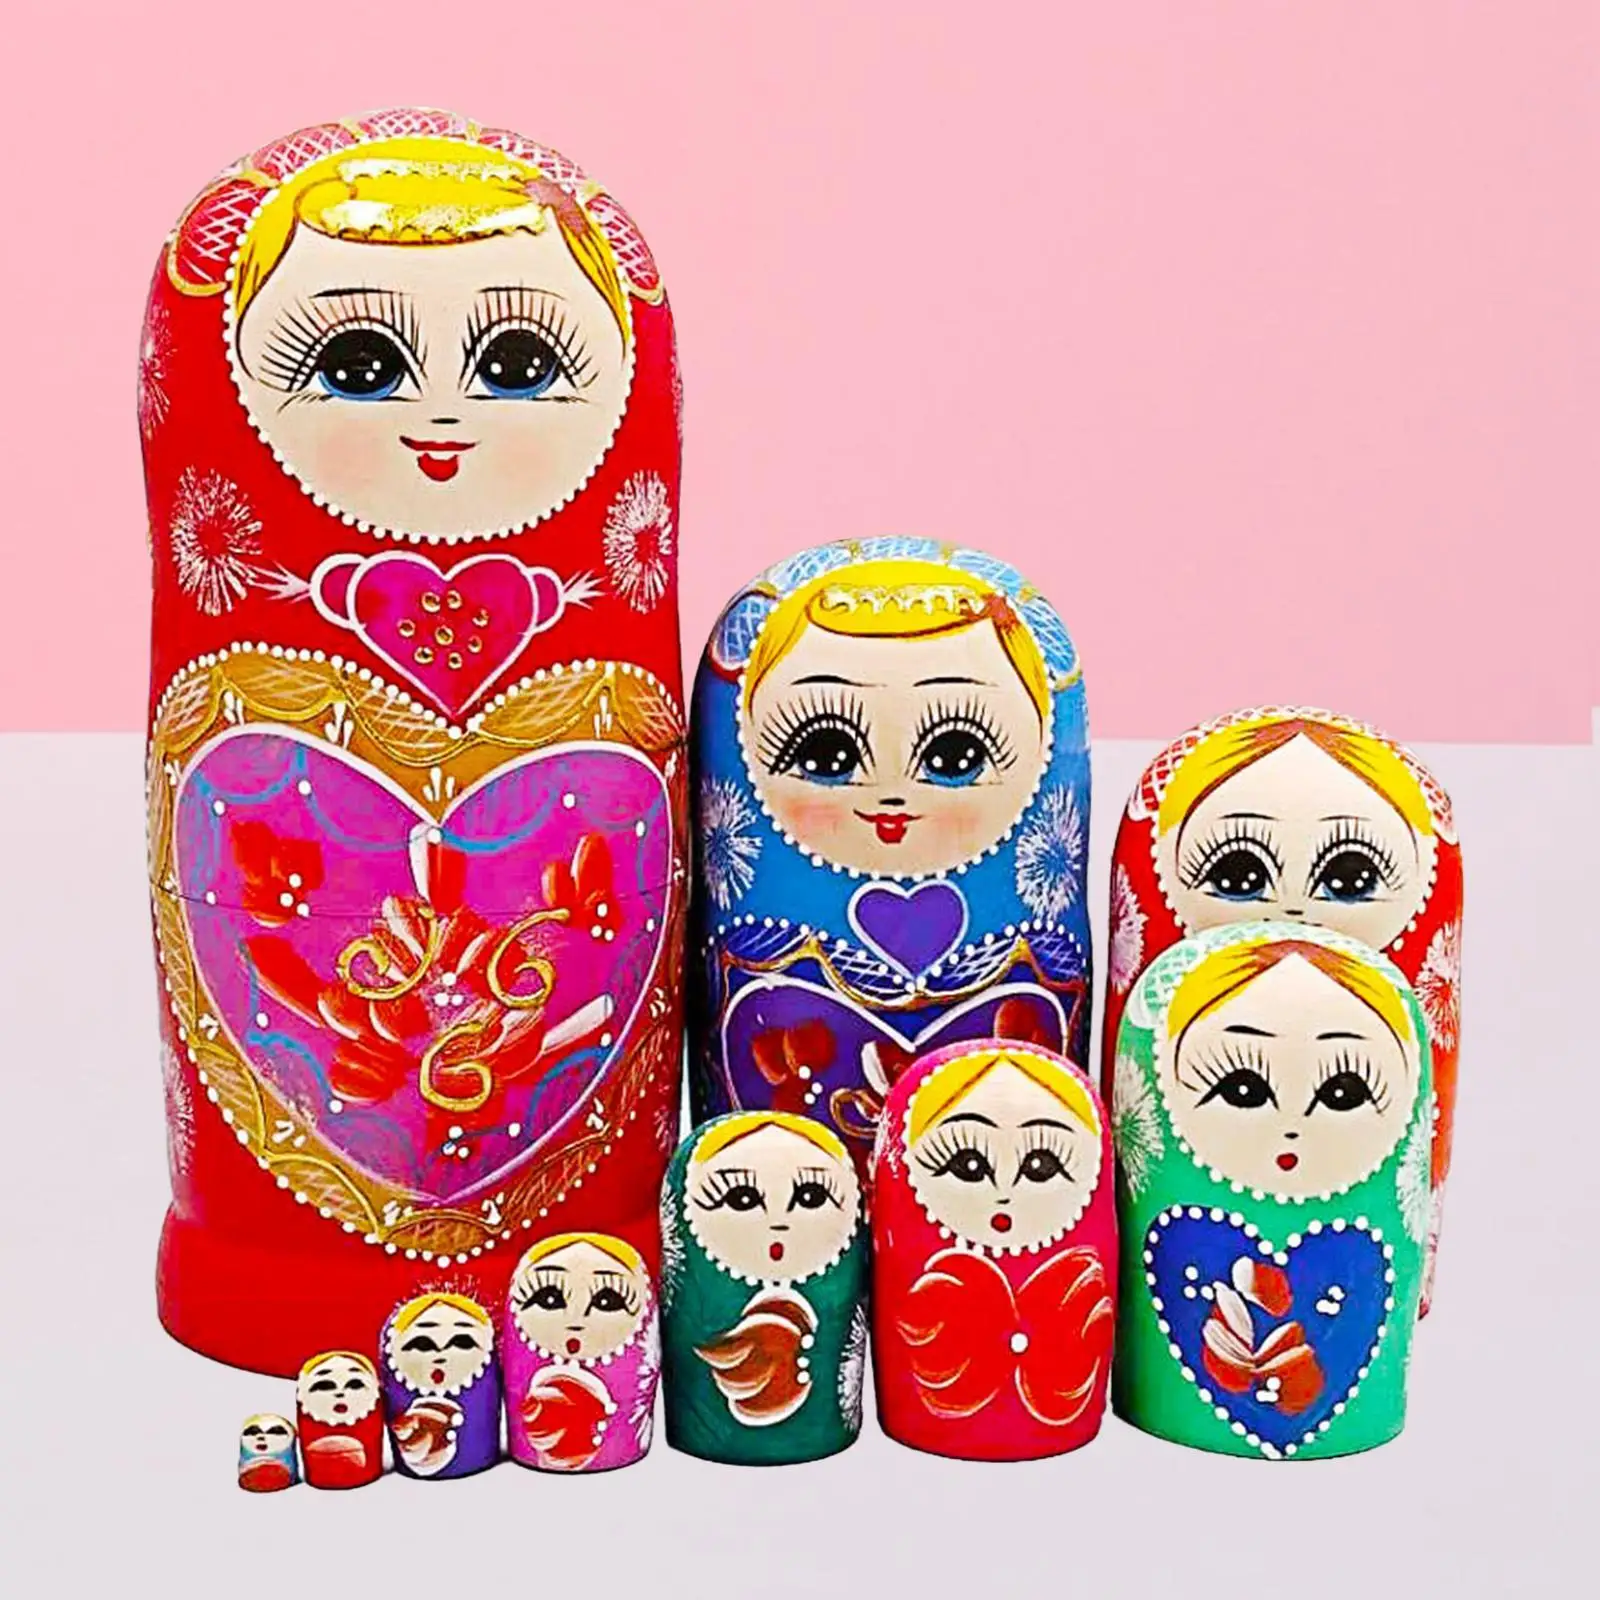 10 Pieces Matryoshka Doll Desk Figures Wooden Russian Nesting Doll Ornaments